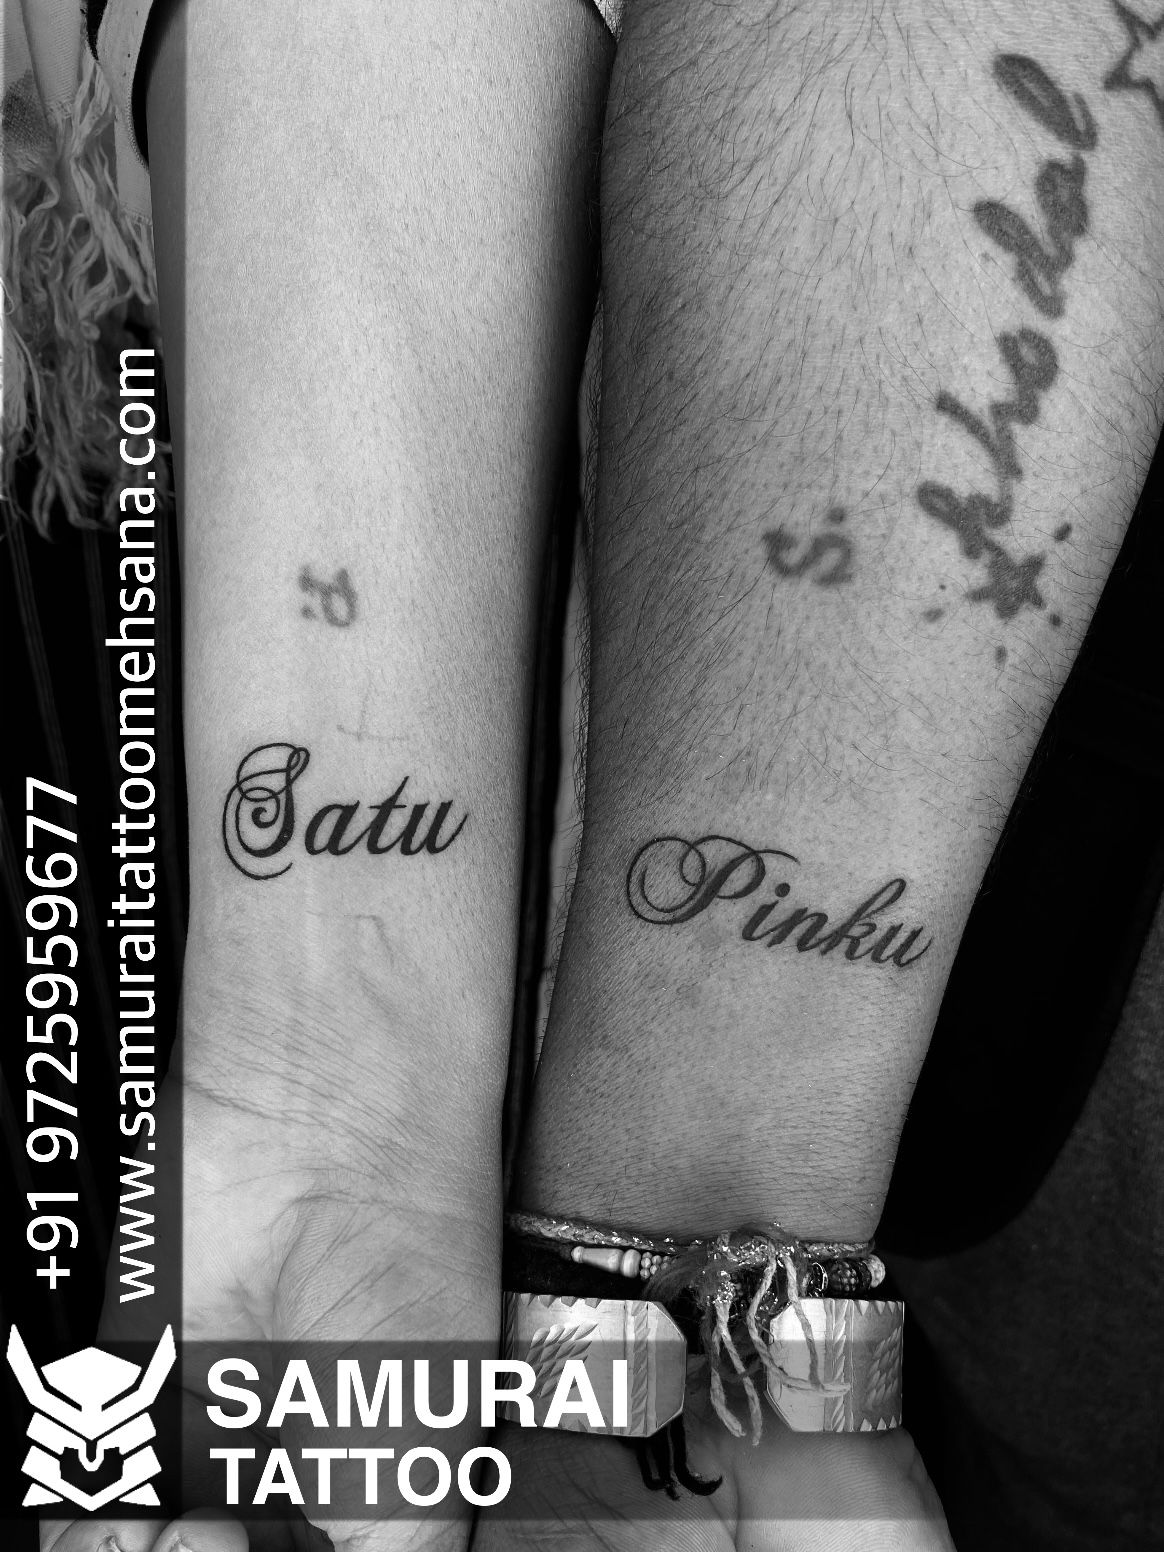 Tattoo uploaded by Vipul Chaudhary • Satu name tattoo | Pinku name ...